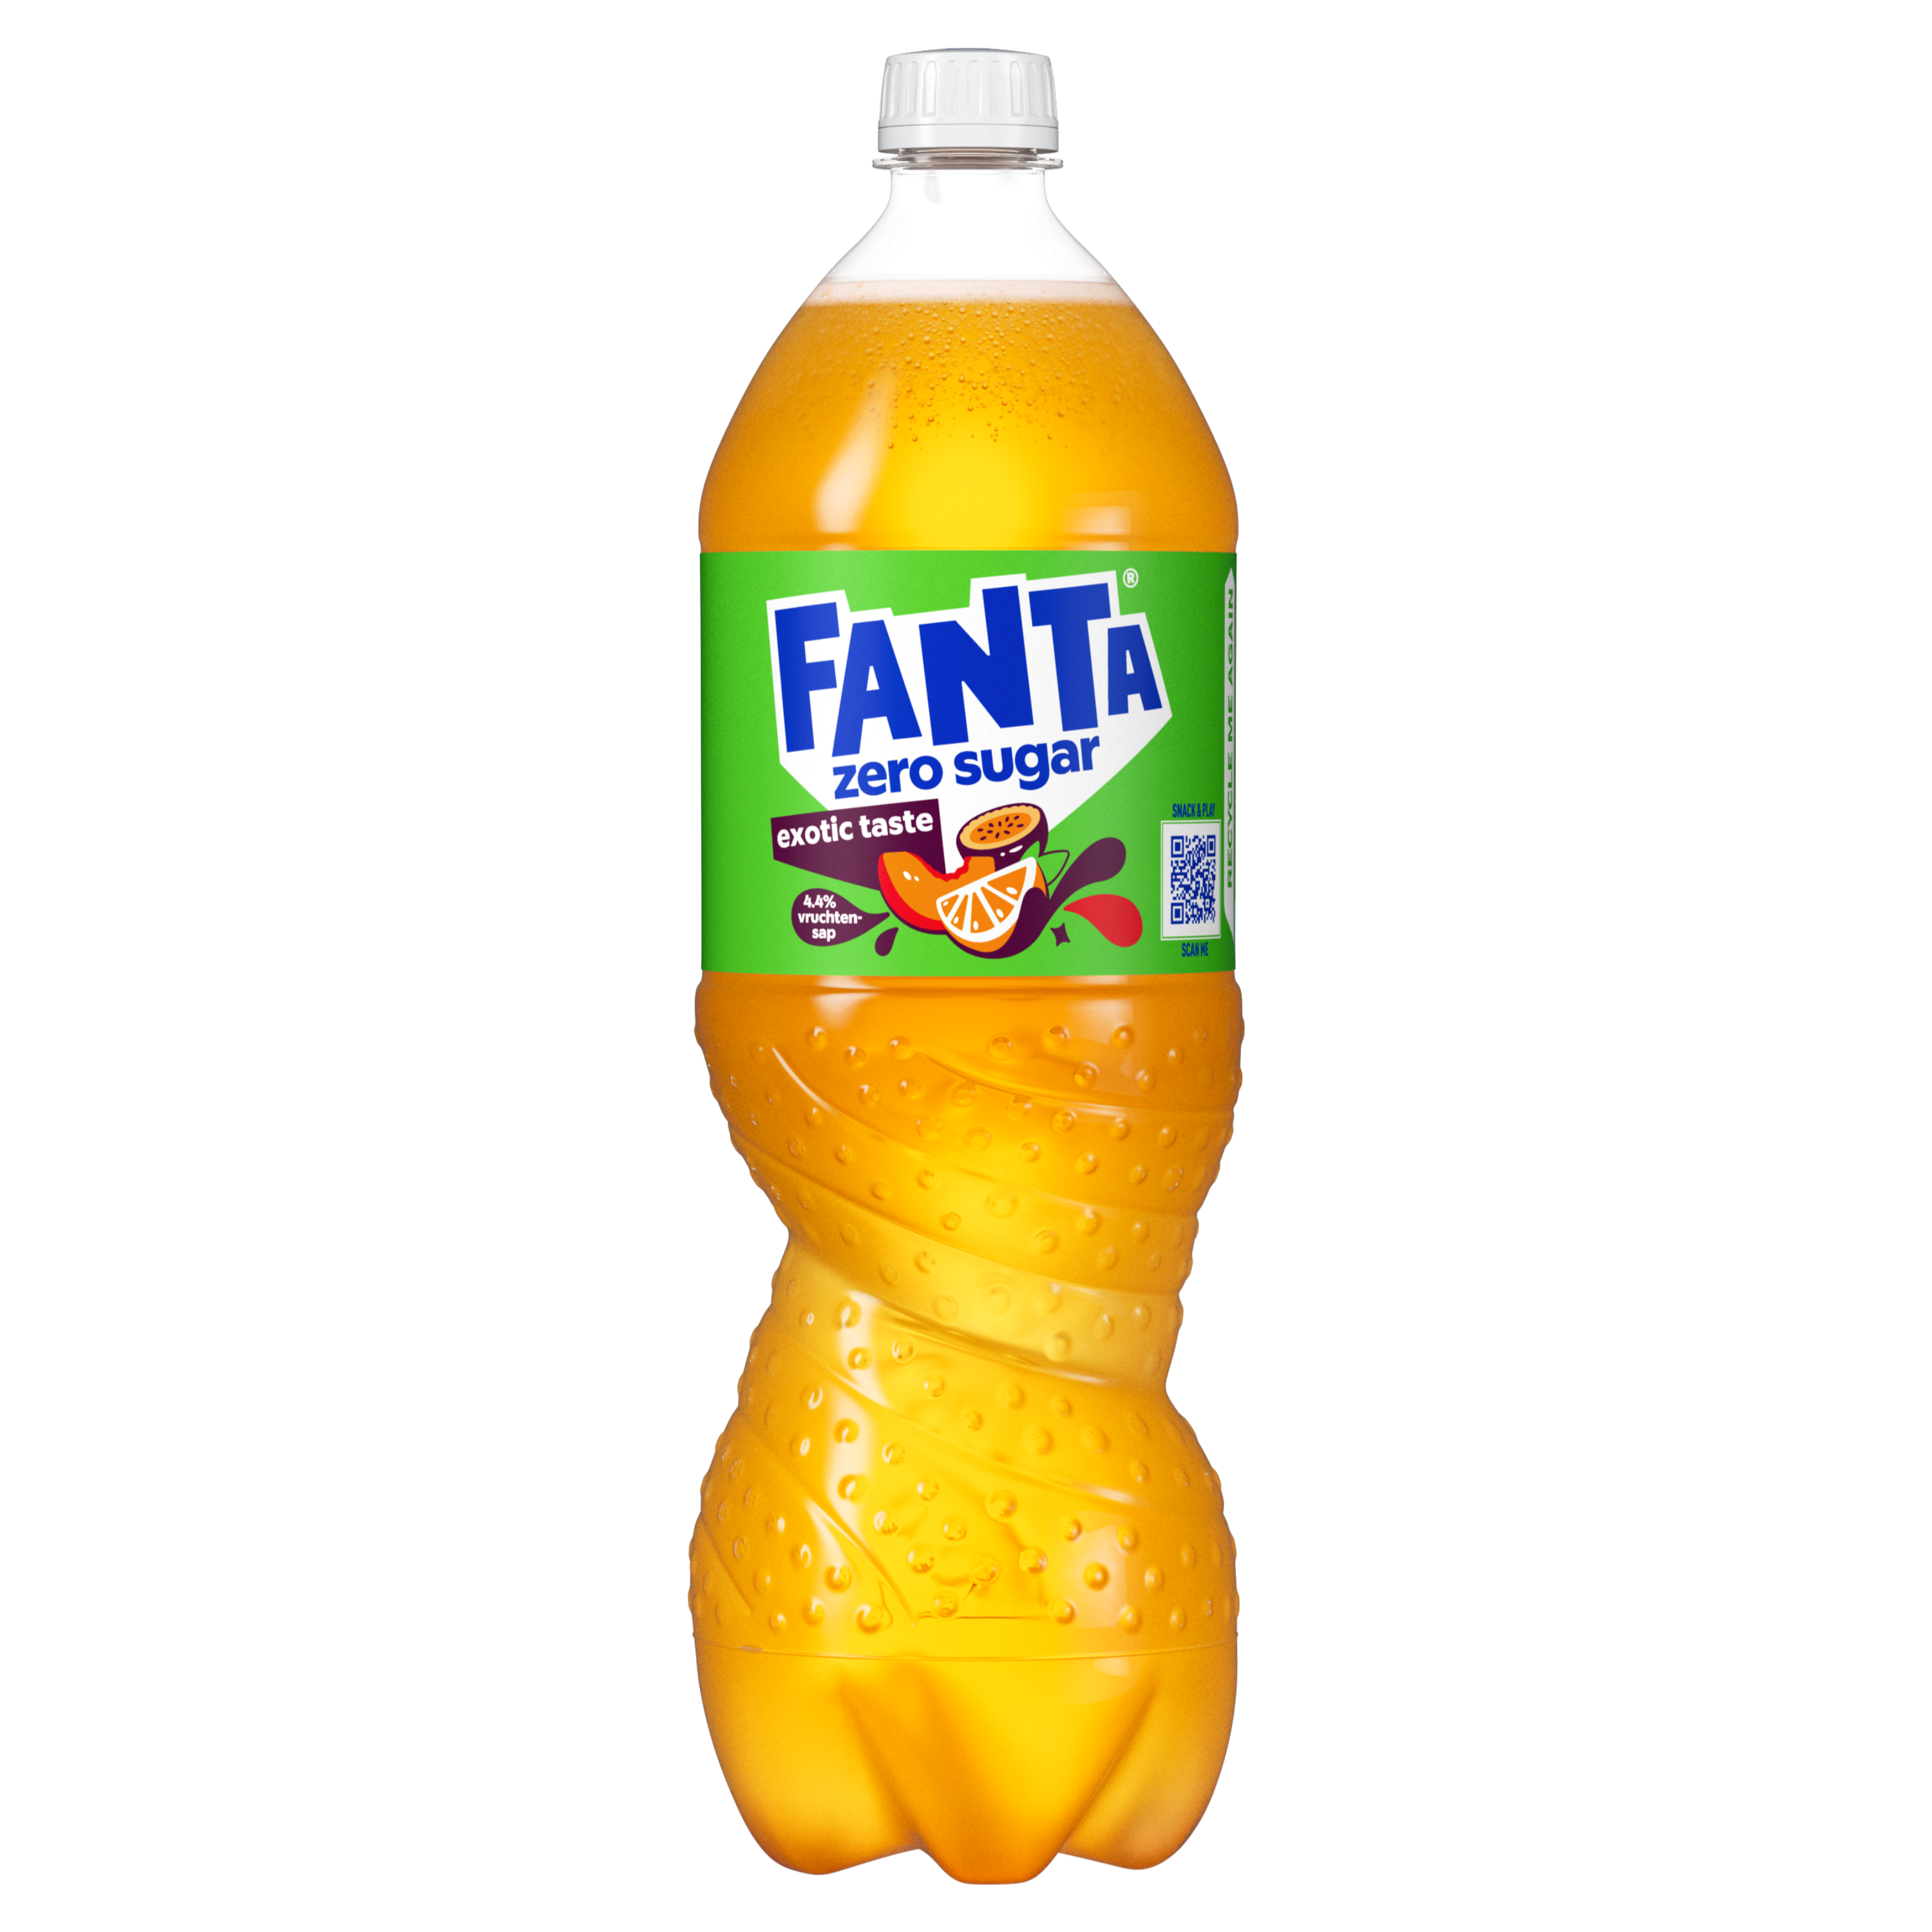 Een fles Fanta exotic taste zero sugar-drank